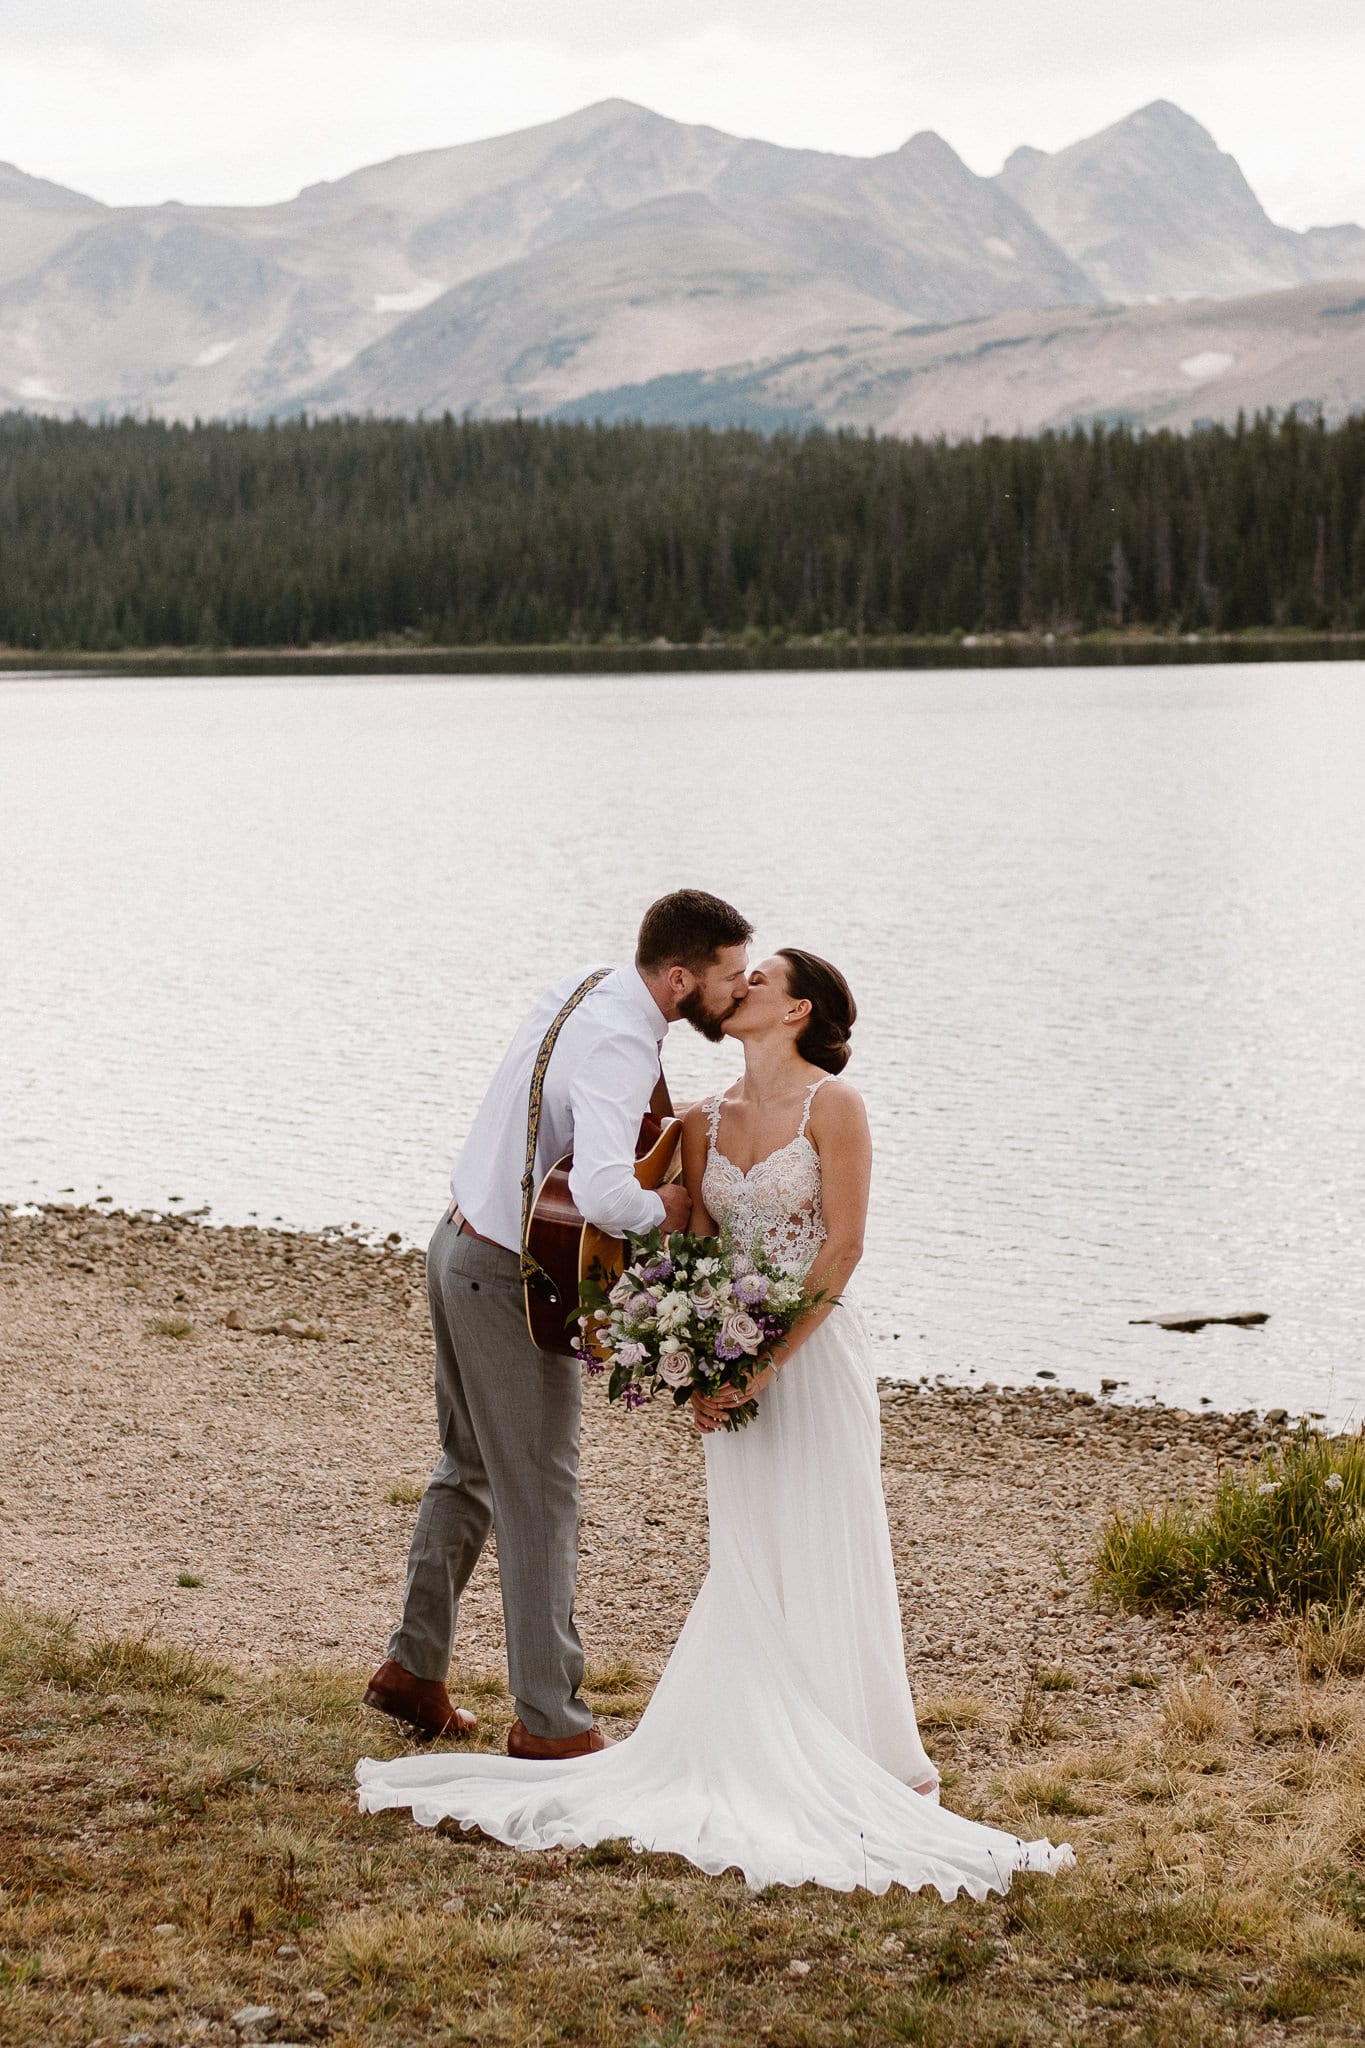 Colorado mountain elopement photographer, alpine lake adventure wedding, Boulder wedding photographer, groom playing guitar and singing to bride